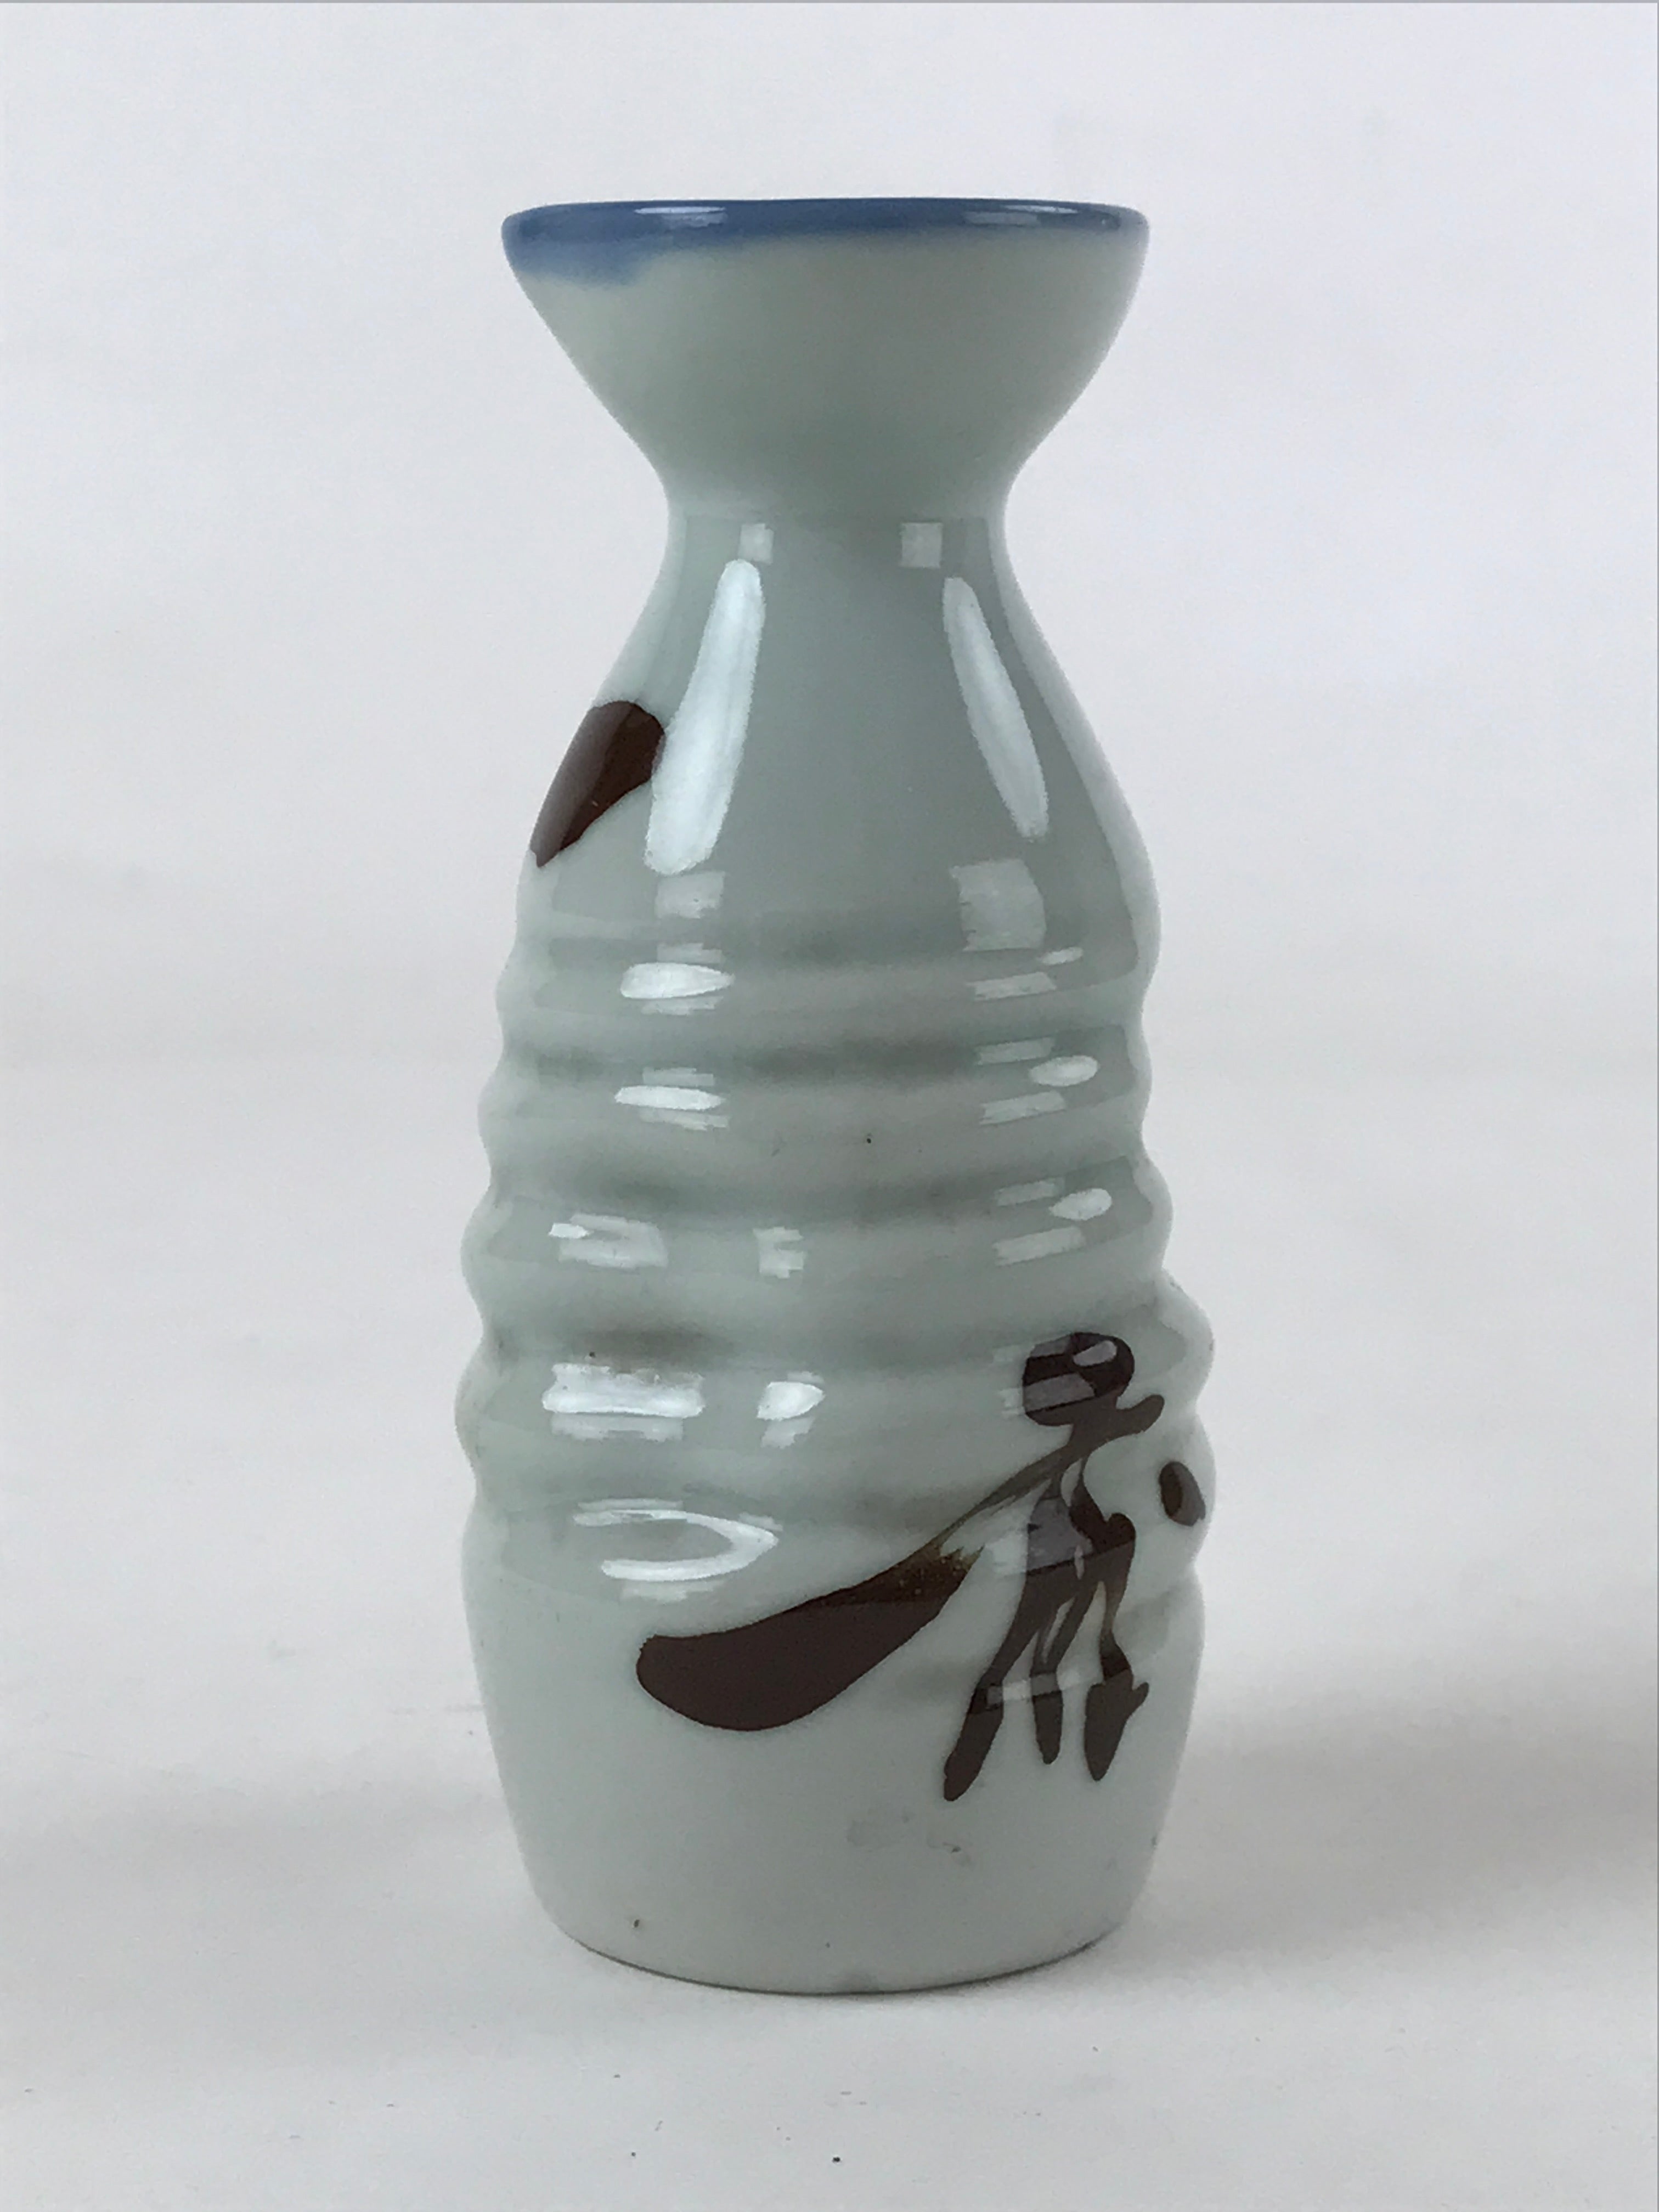 Japanese Ceramic Sake Bottle Tokkuri Ichigo Vtg Gray Brown Ideograms TS569